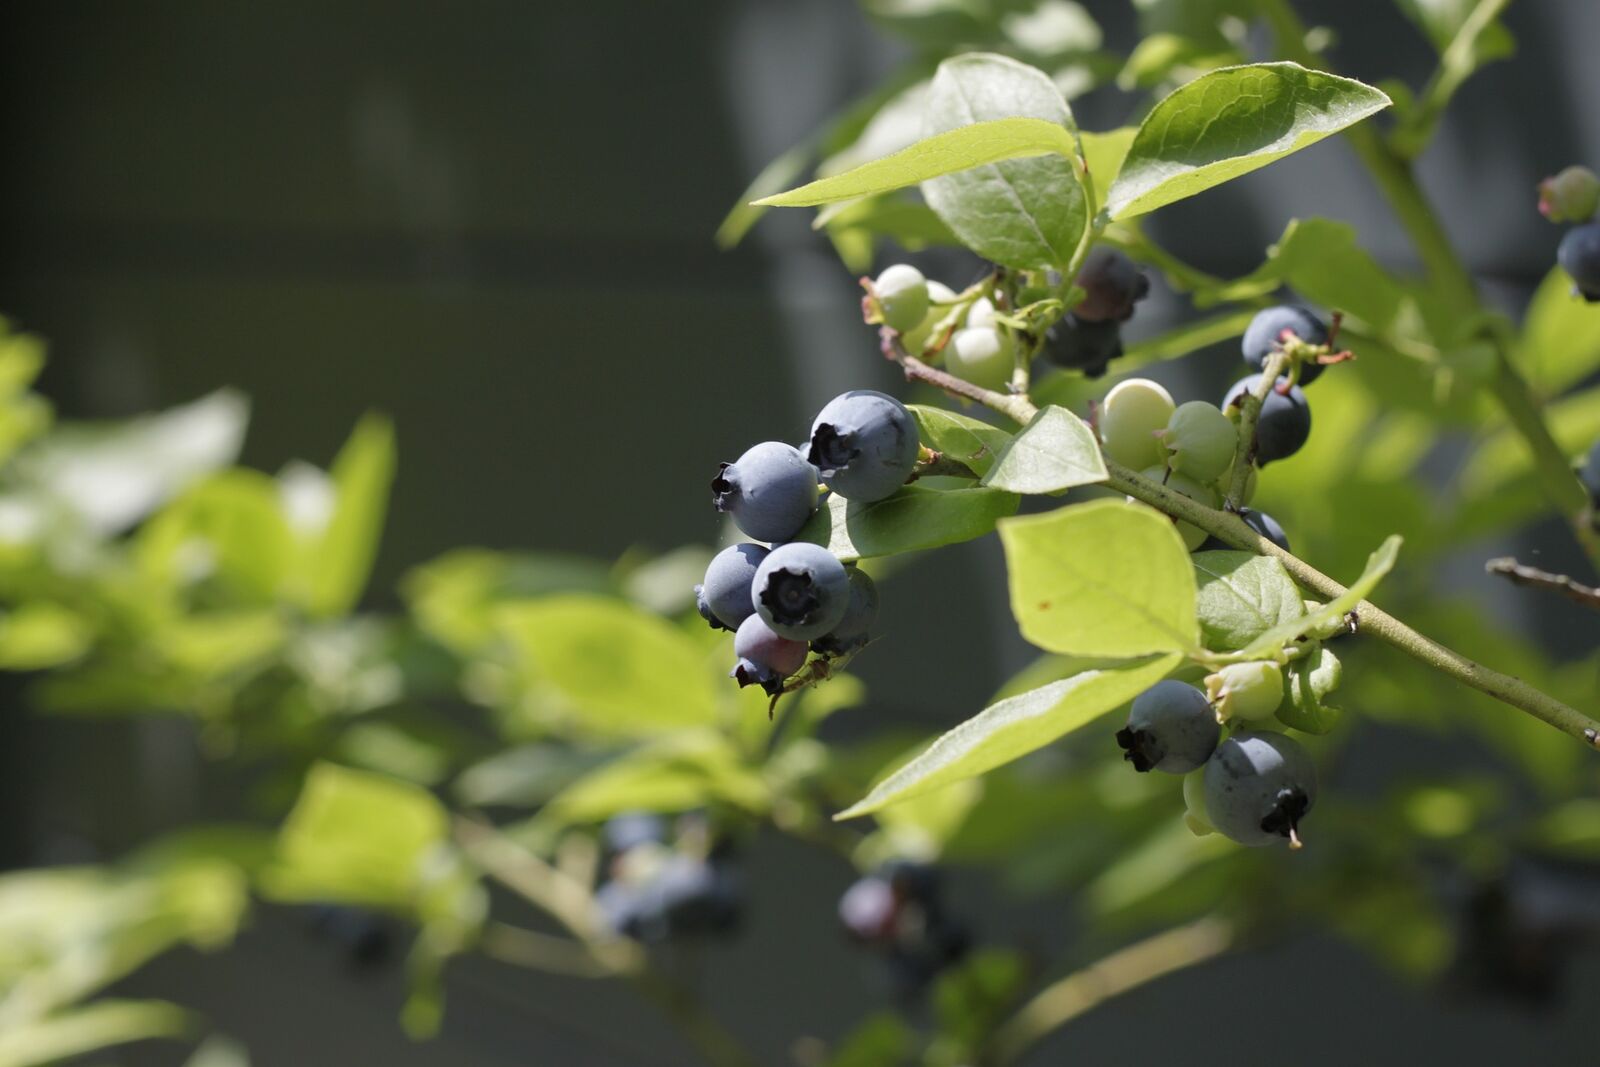 Propagating blueberries